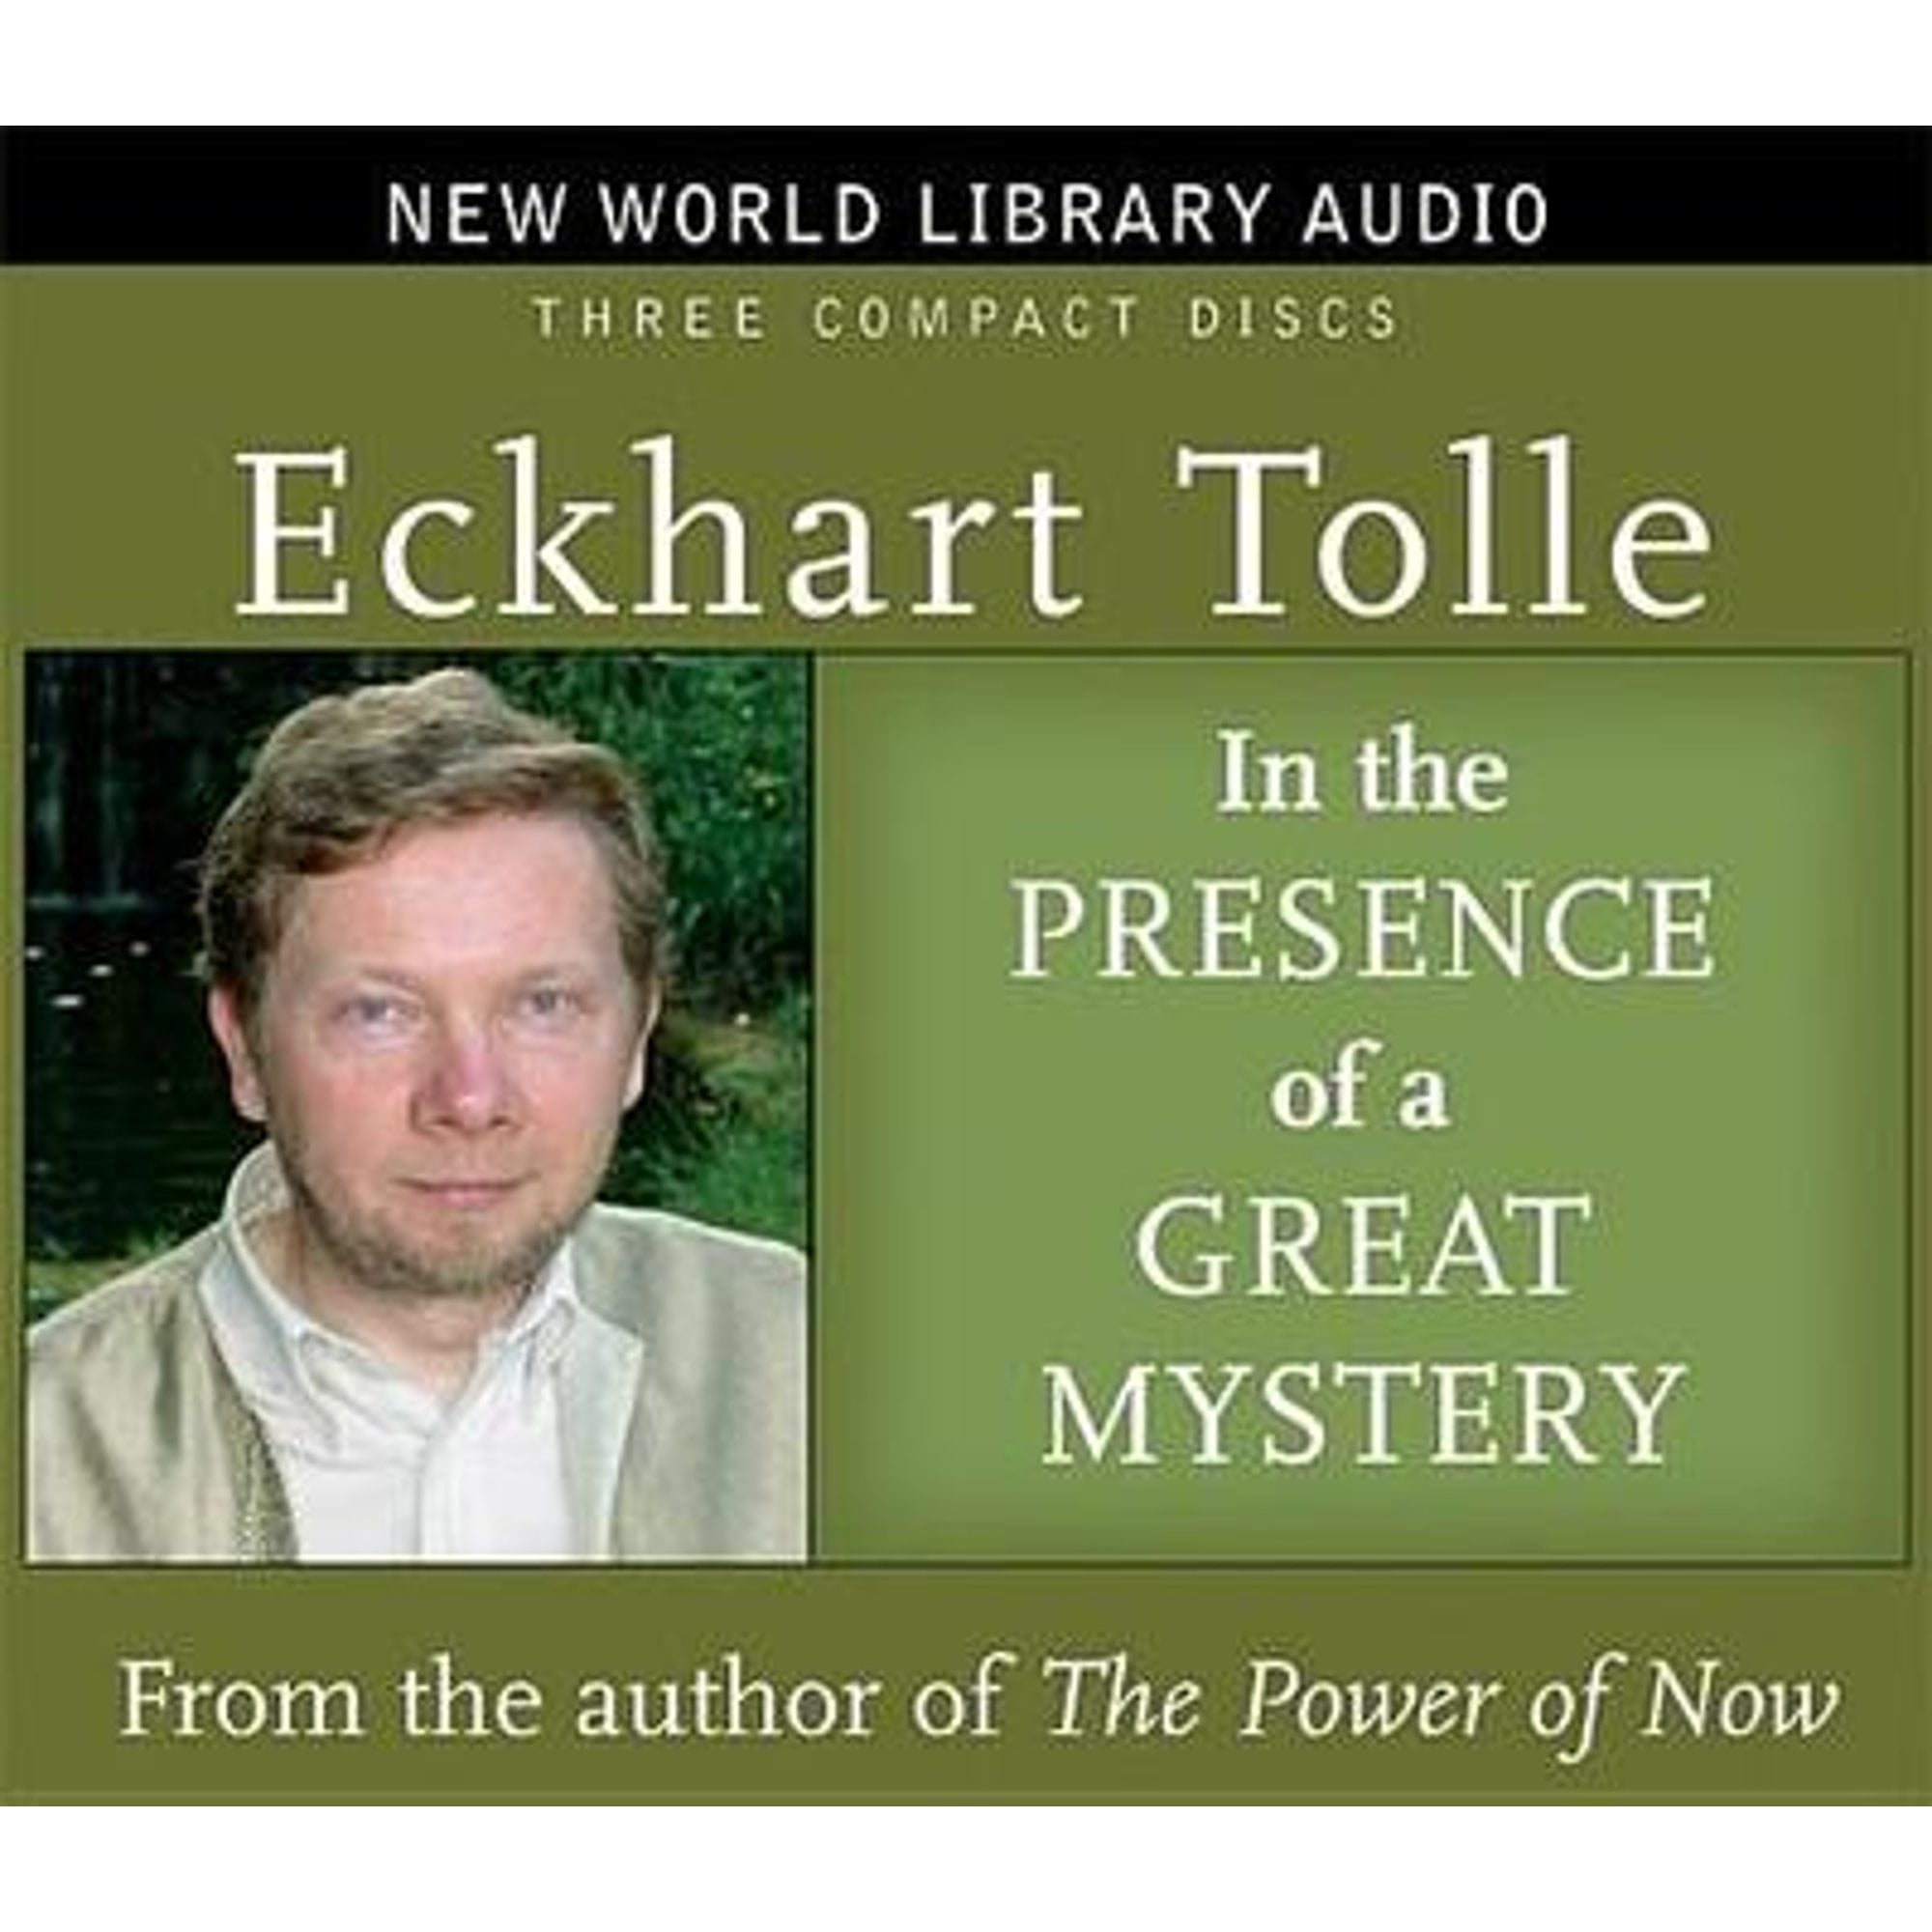 Экхарт Толле биография. Dear Mr.Eckhart tolle!. Пенелопа Экхарт читает книгу в саду. Great mystery